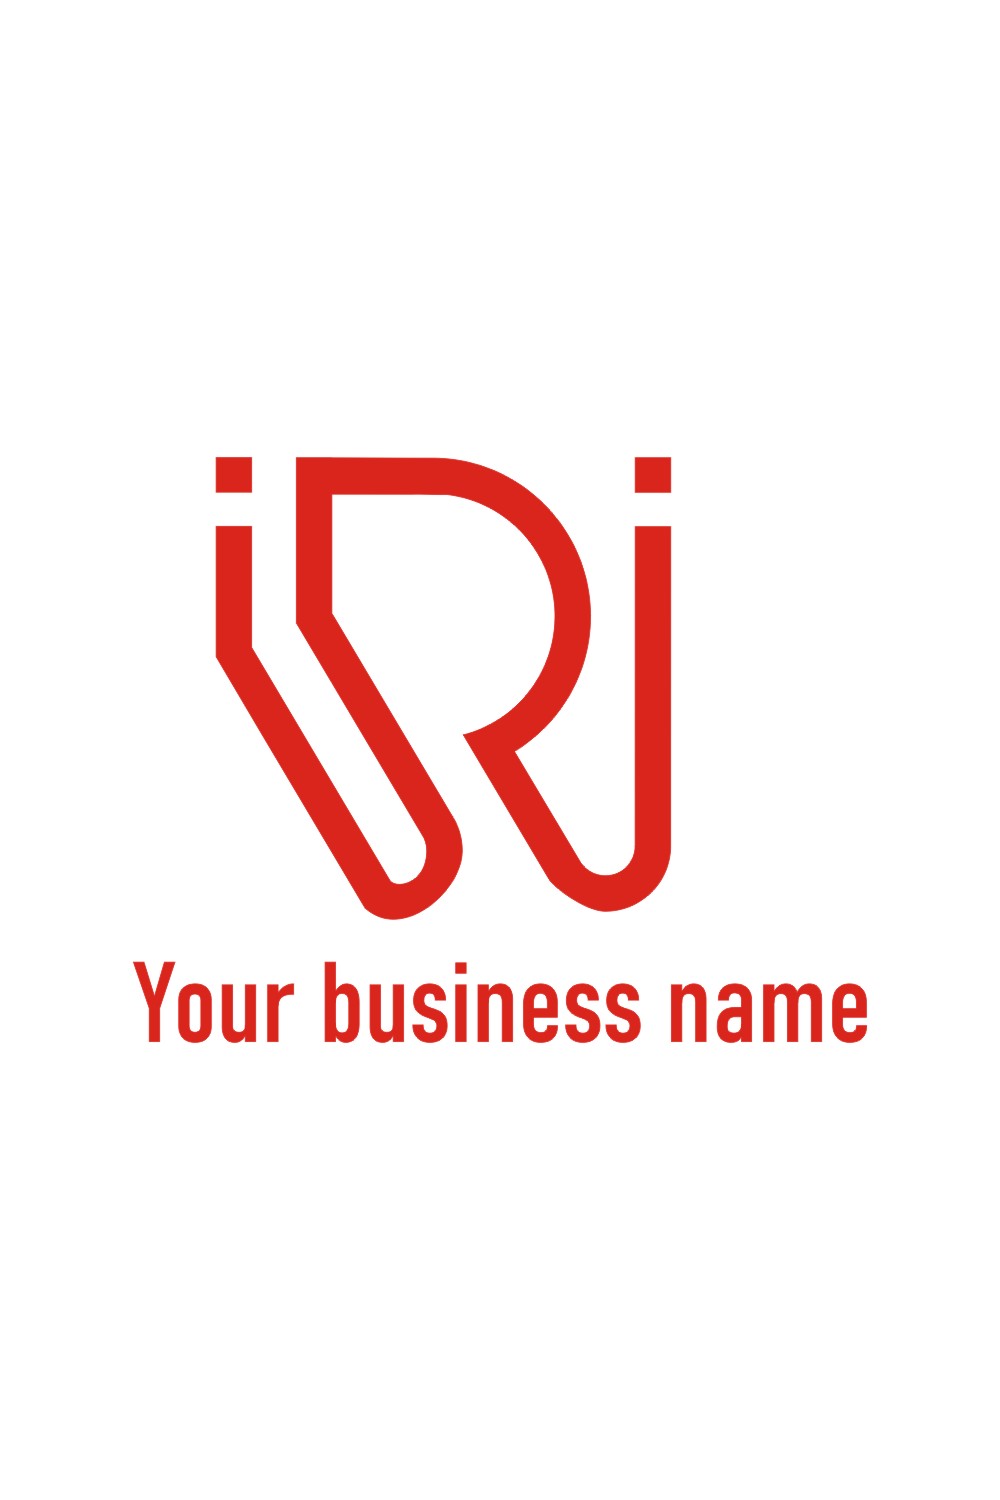 I and R monogram logo pinterest preview image.